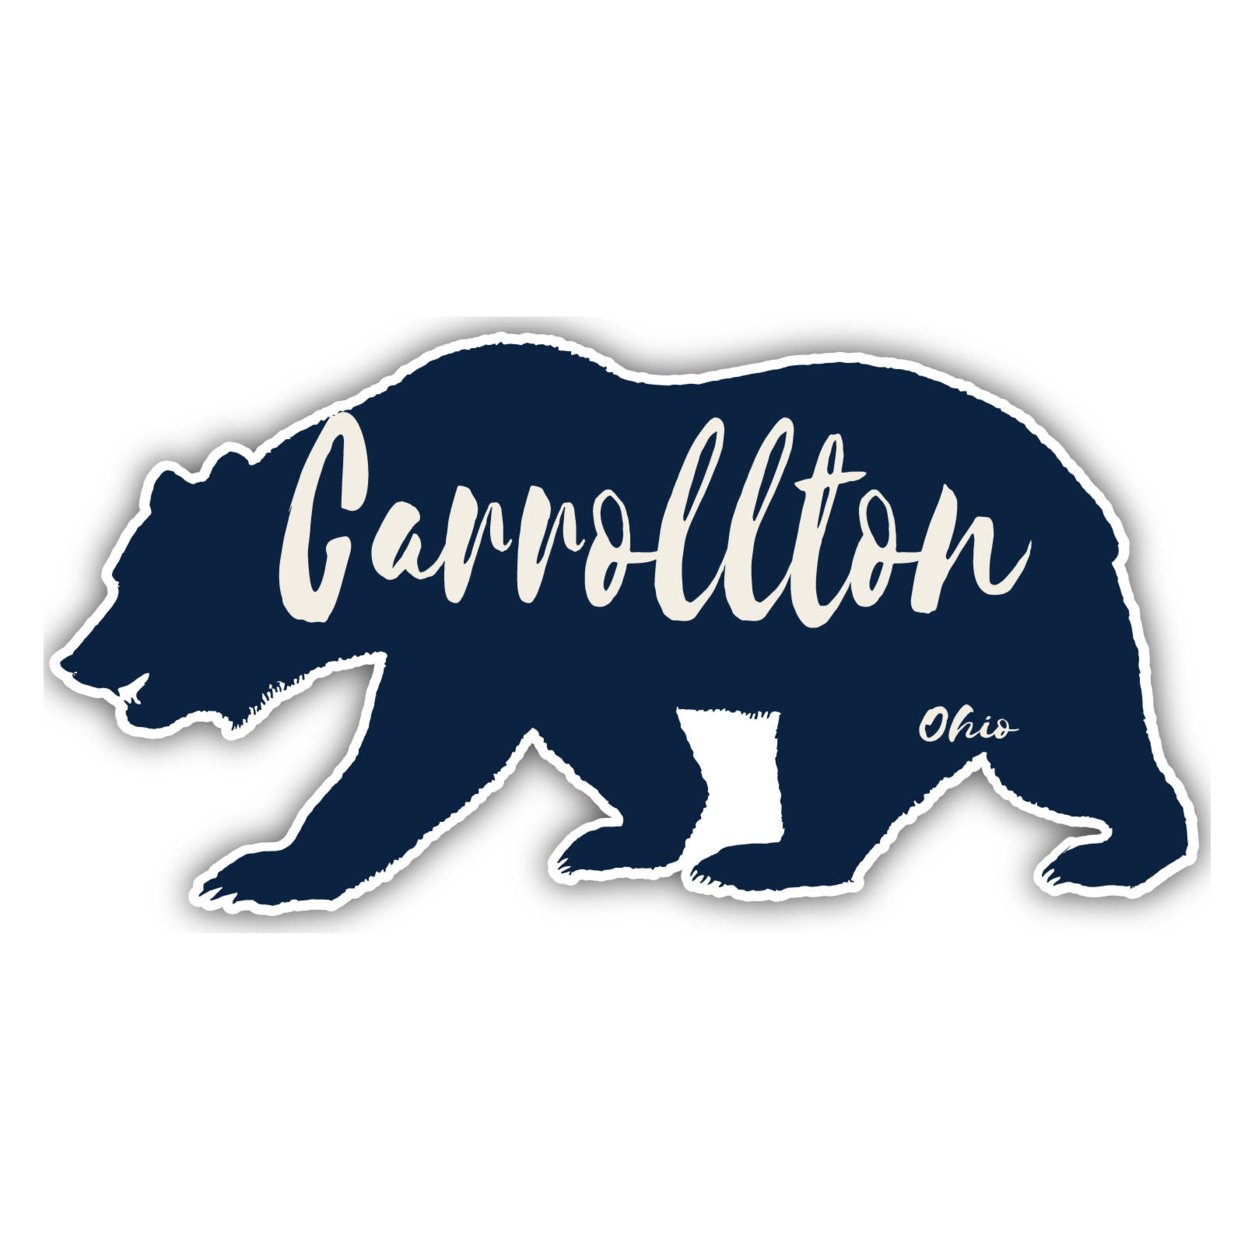 Carrollton Ohio Souvenir Decorative Stickers (Choose Theme And Size) - Single Unit, 4-Inch, Bear